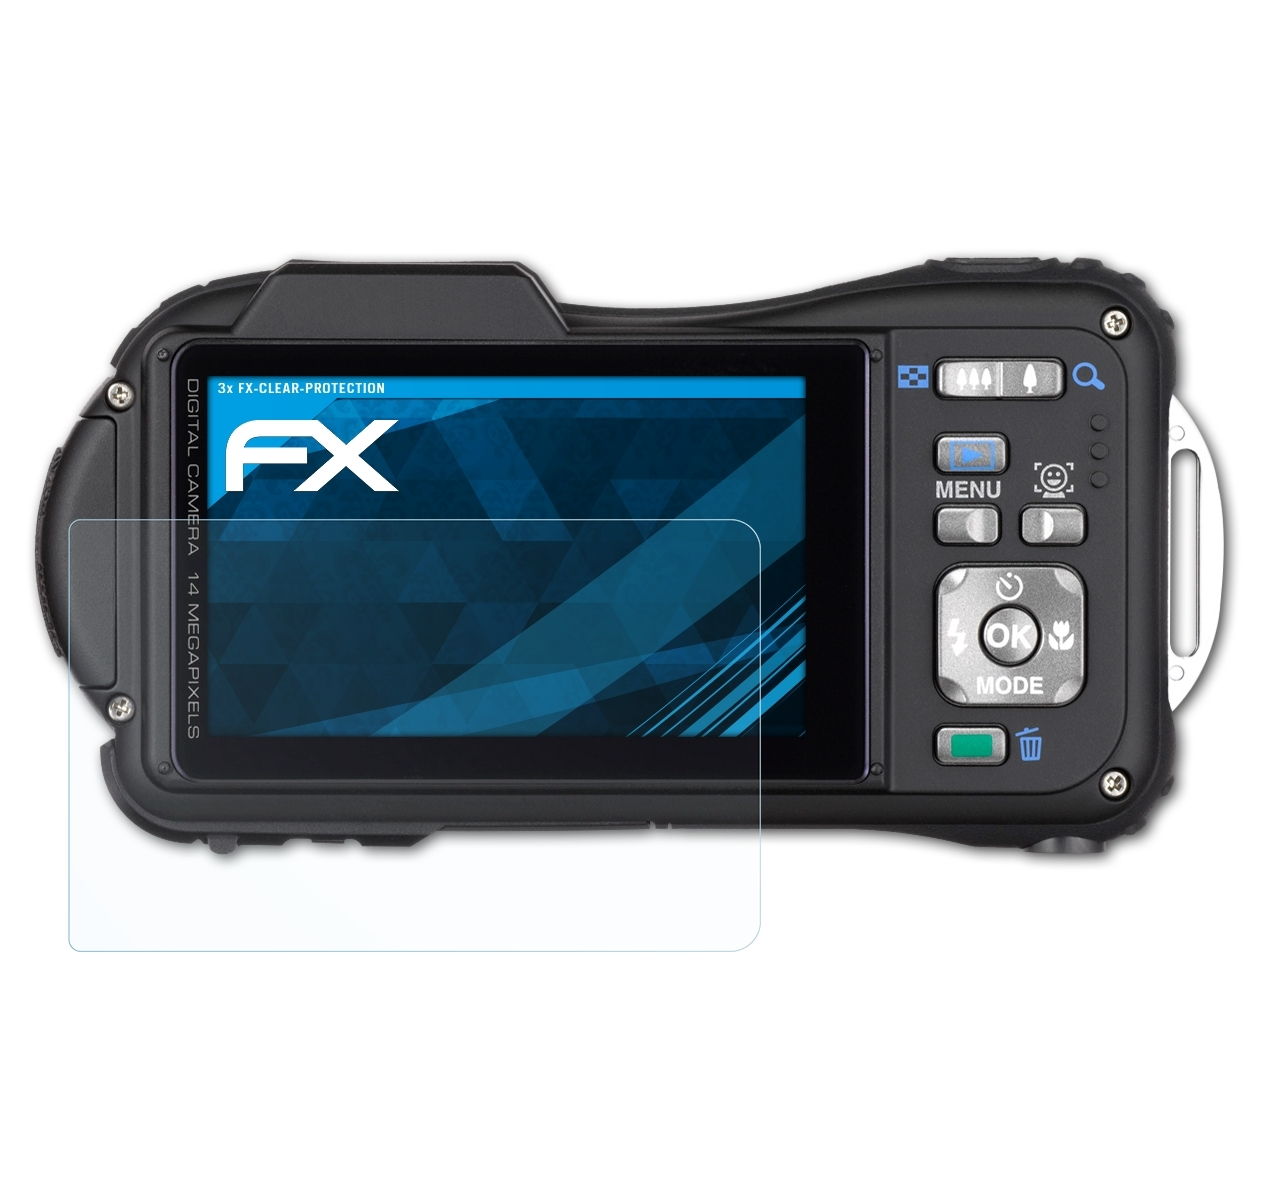 ATFOLIX 3x Optio GPS) FX-Clear Displayschutz(für WG-1 Pentax / WG-1